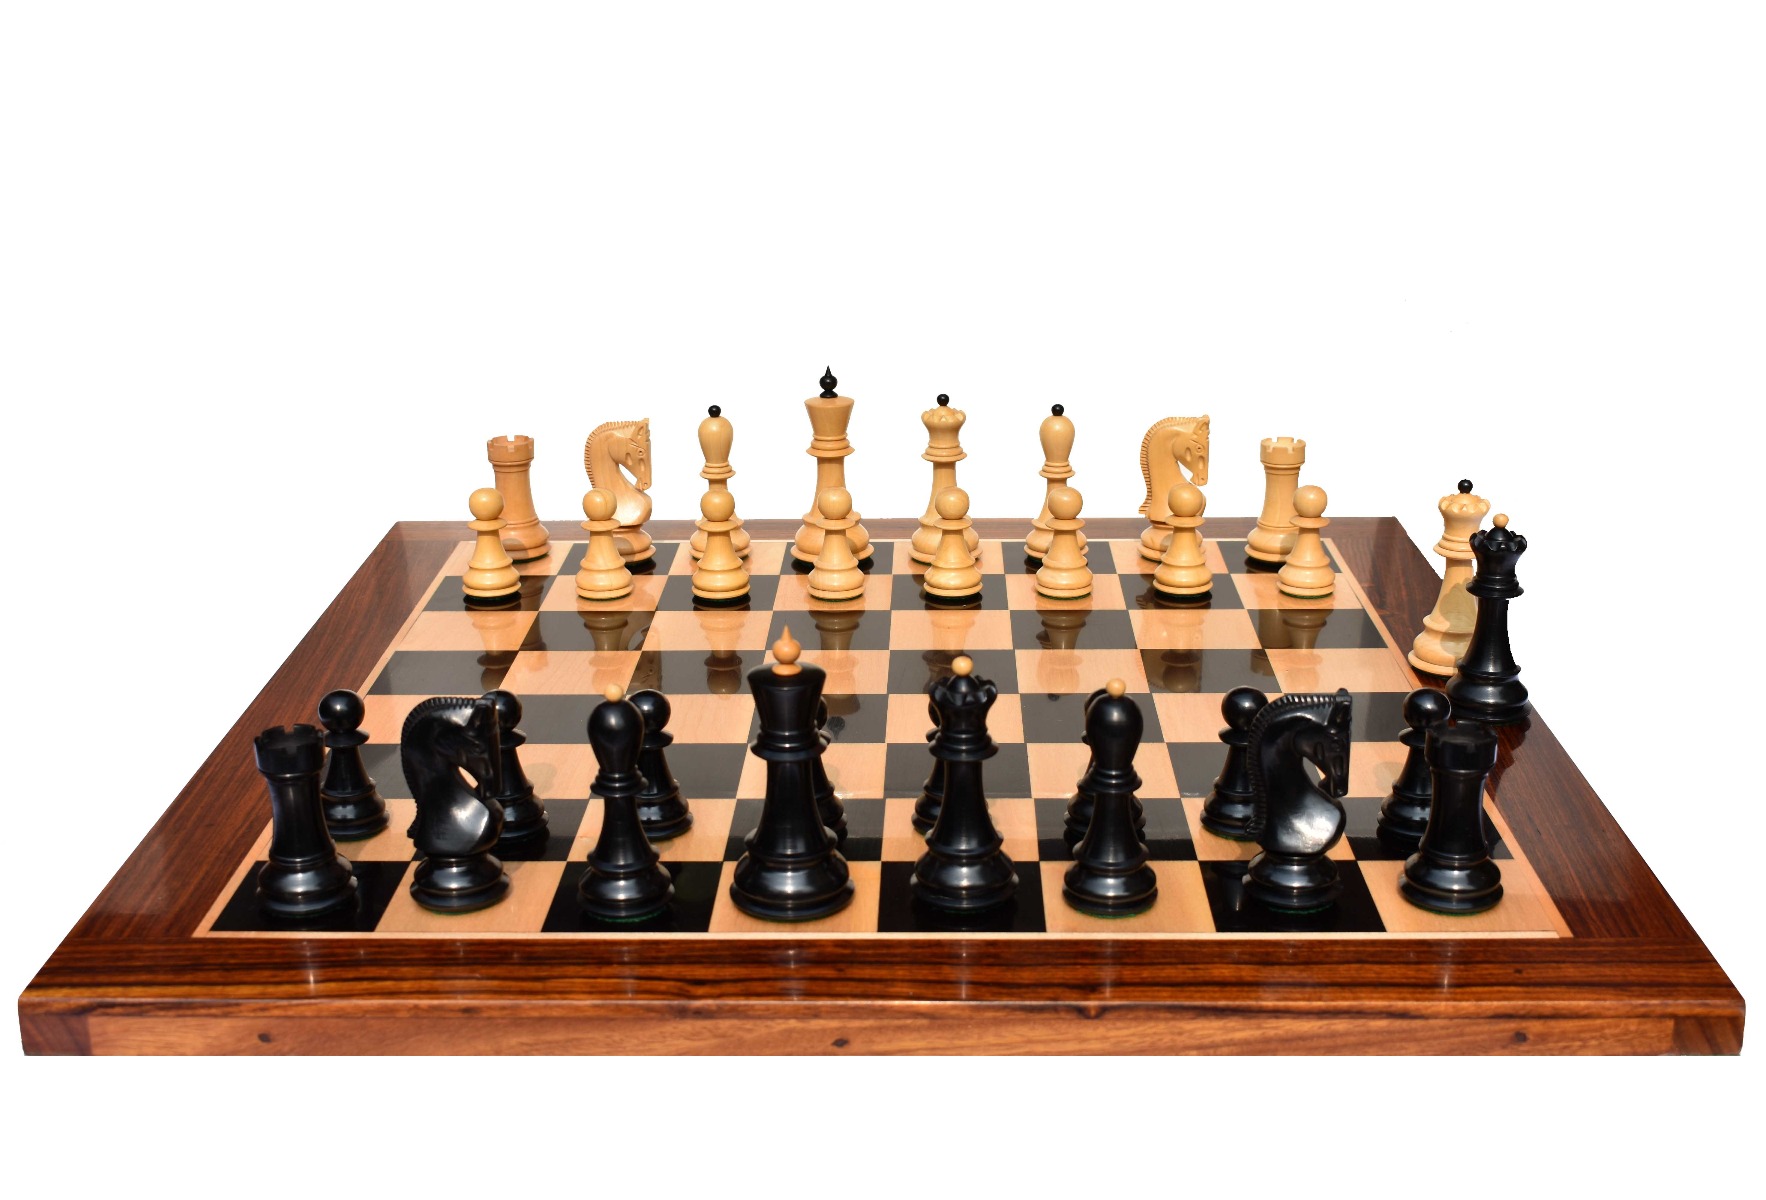 Large shiny black chess king - Curiosa Cabinet